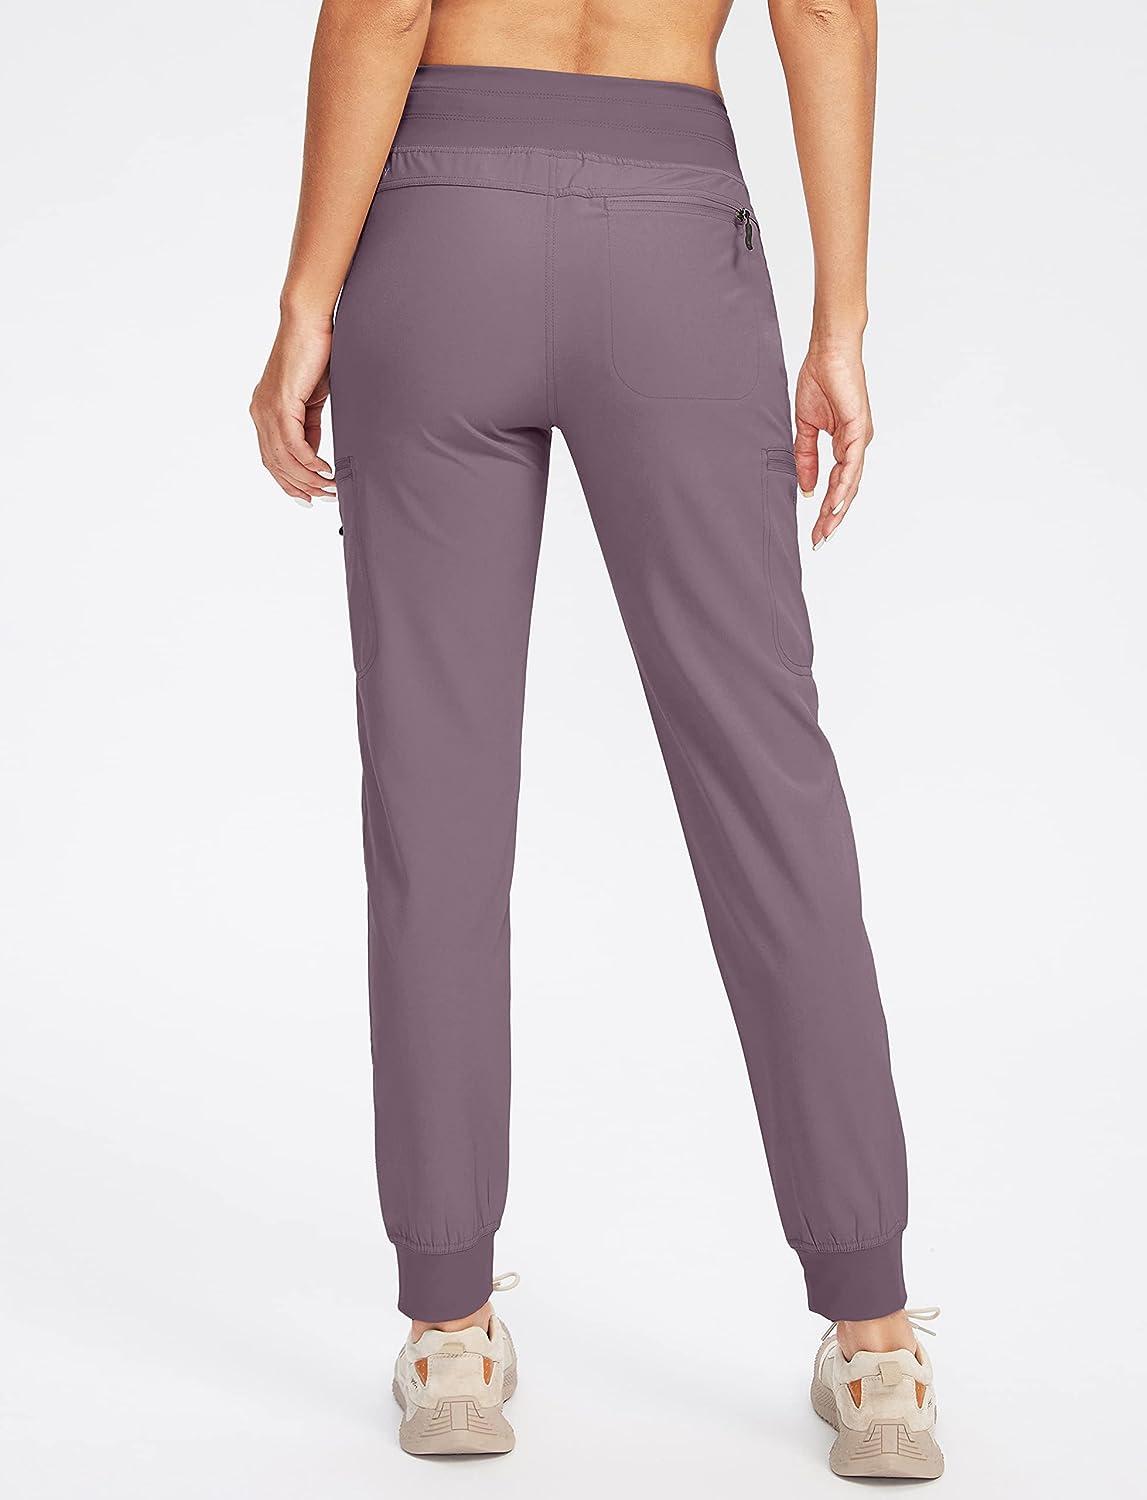 SANTINY Women's Hiking Cargo Joggers Pants with 5 Zipper Pockets  Lightweight Quick Dry High Waisted Outdoor Travel Pants Purple Medium